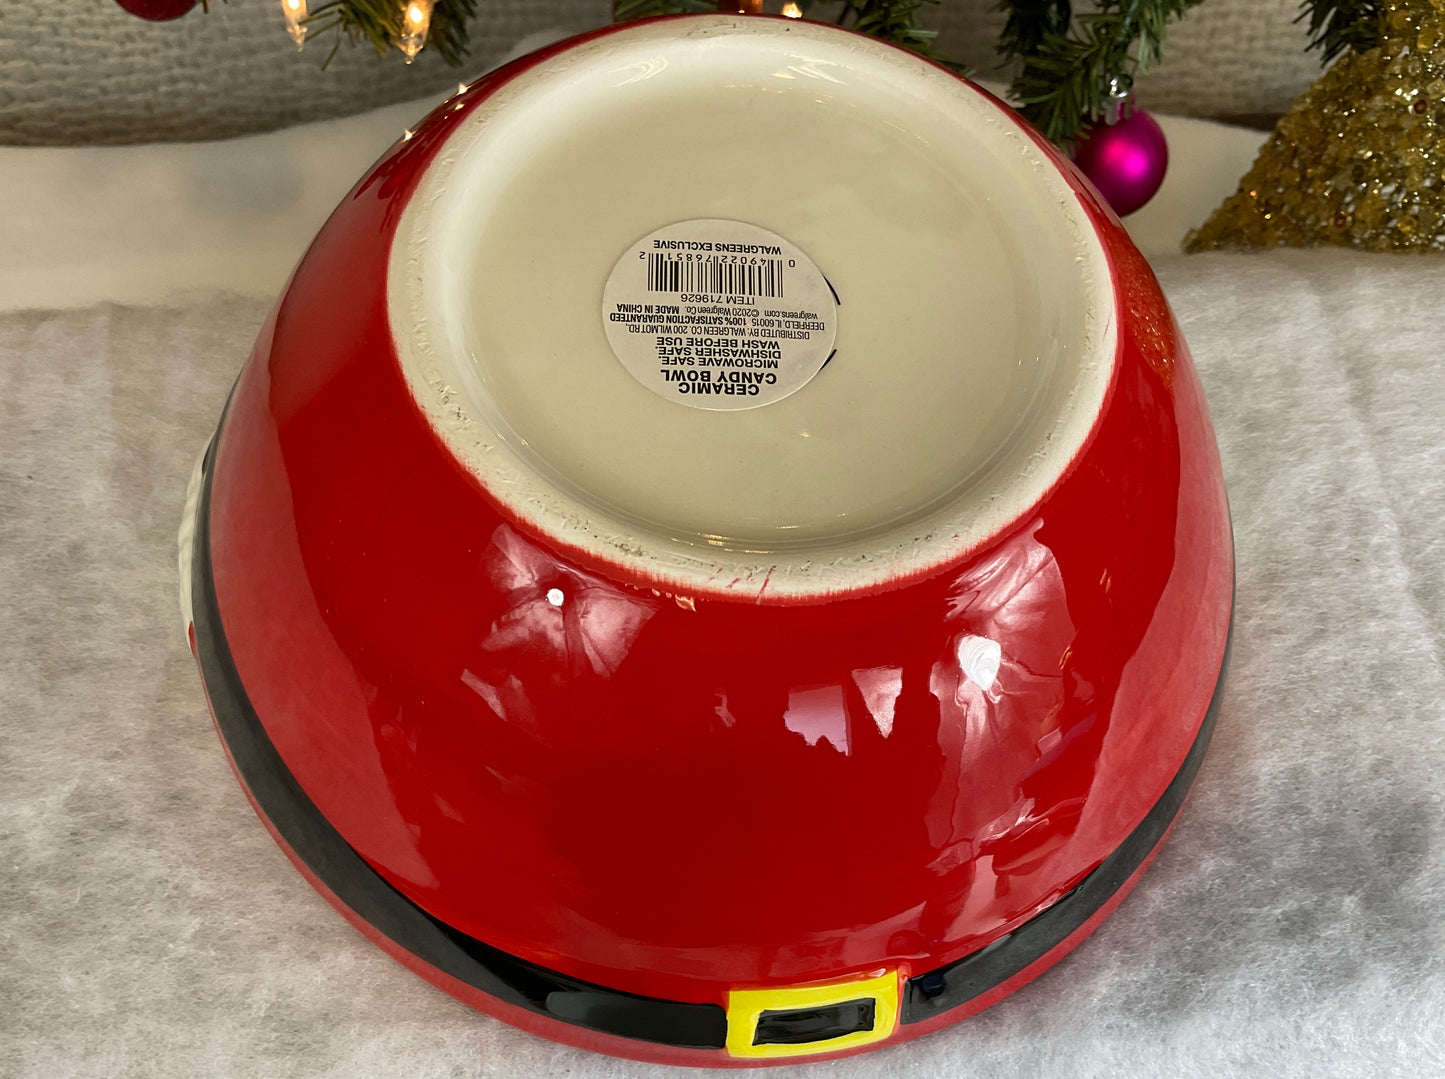 Disney's Nightmare Before Christmas Santa Jack Ceramic Candy Bowl